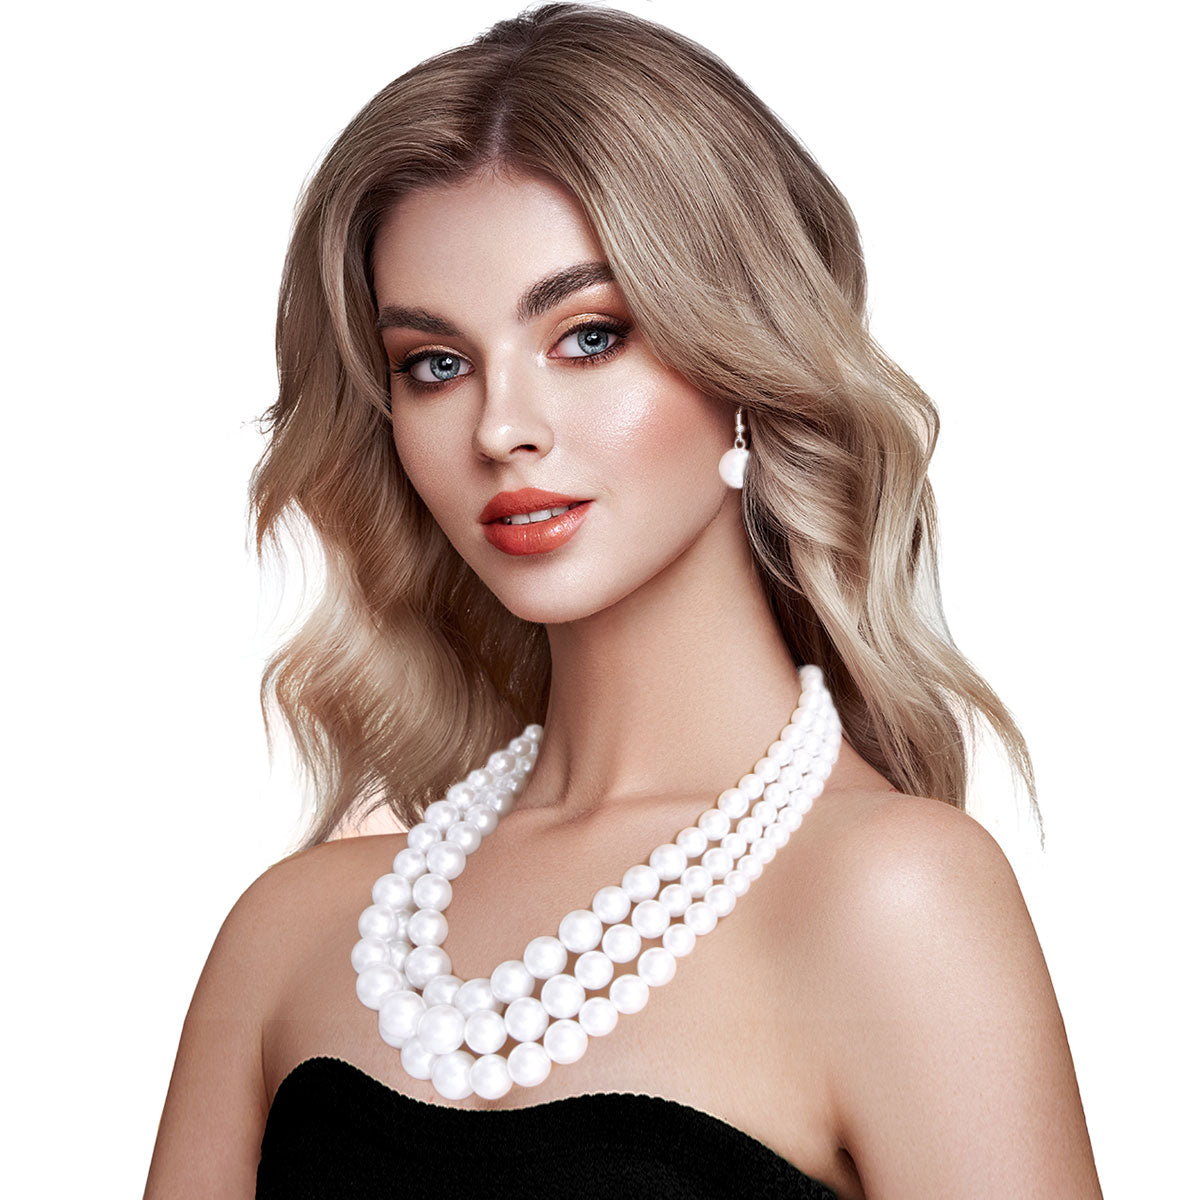 White Pearl Graduated Multi Strand Necklace Set